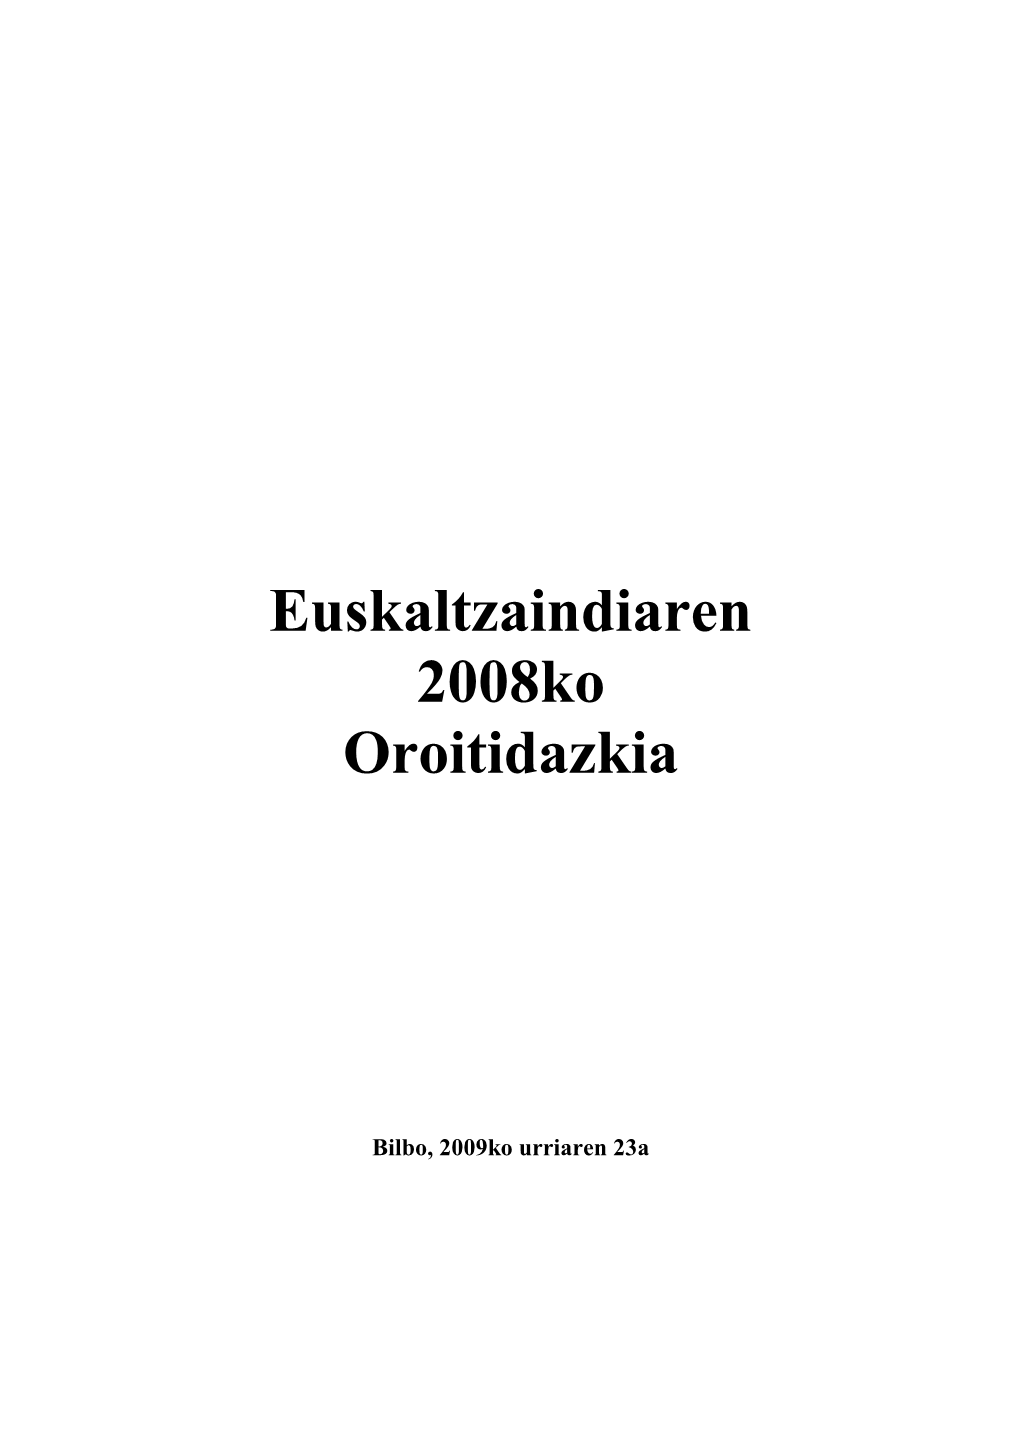 Oroitidazkia 2008